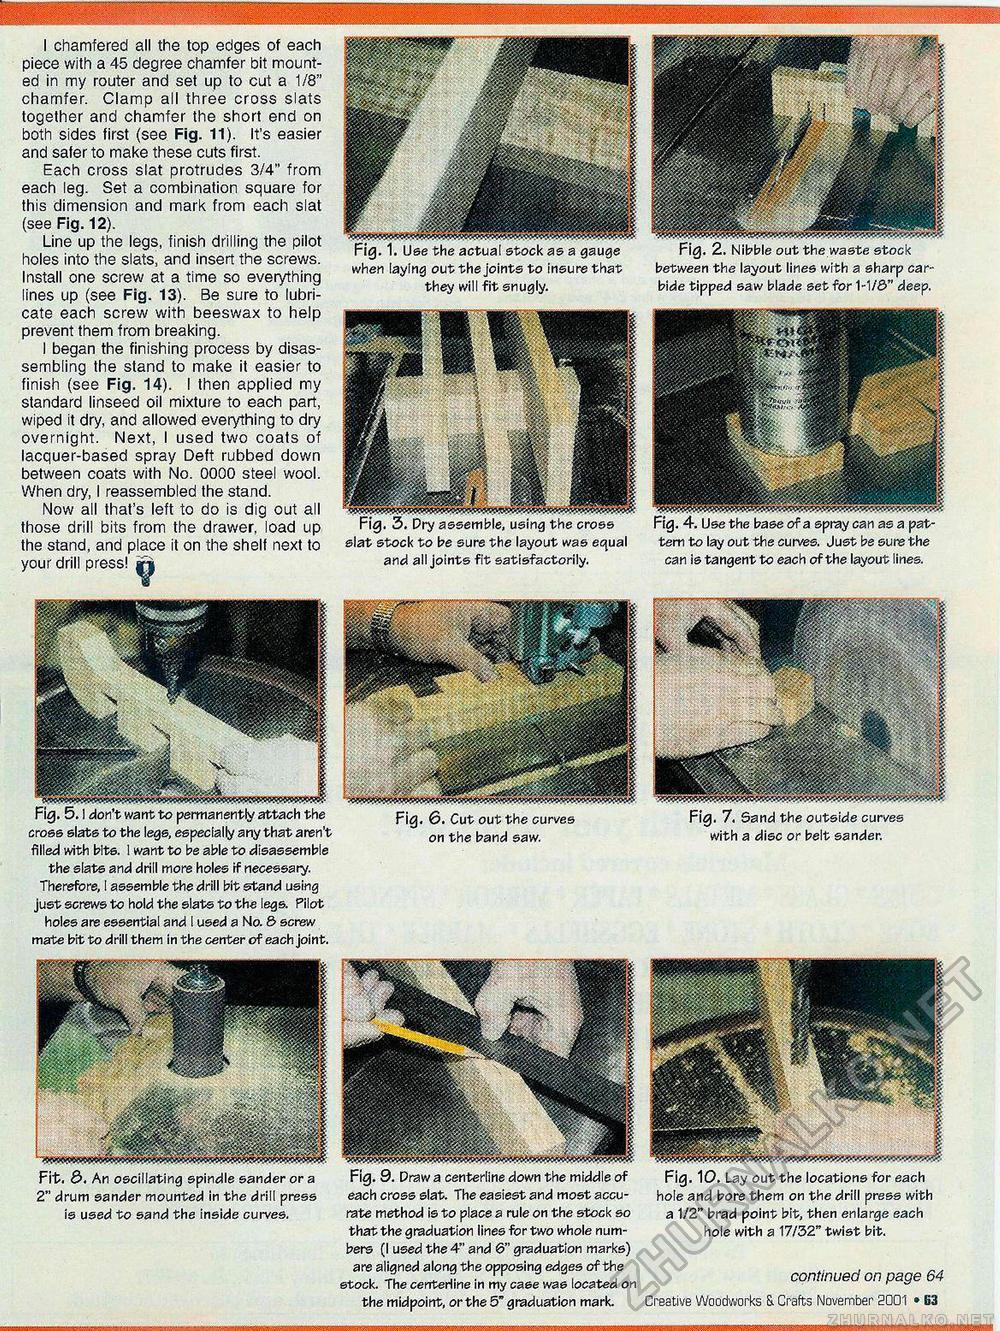 Creative Woodworks & crafts 2001-11,  63